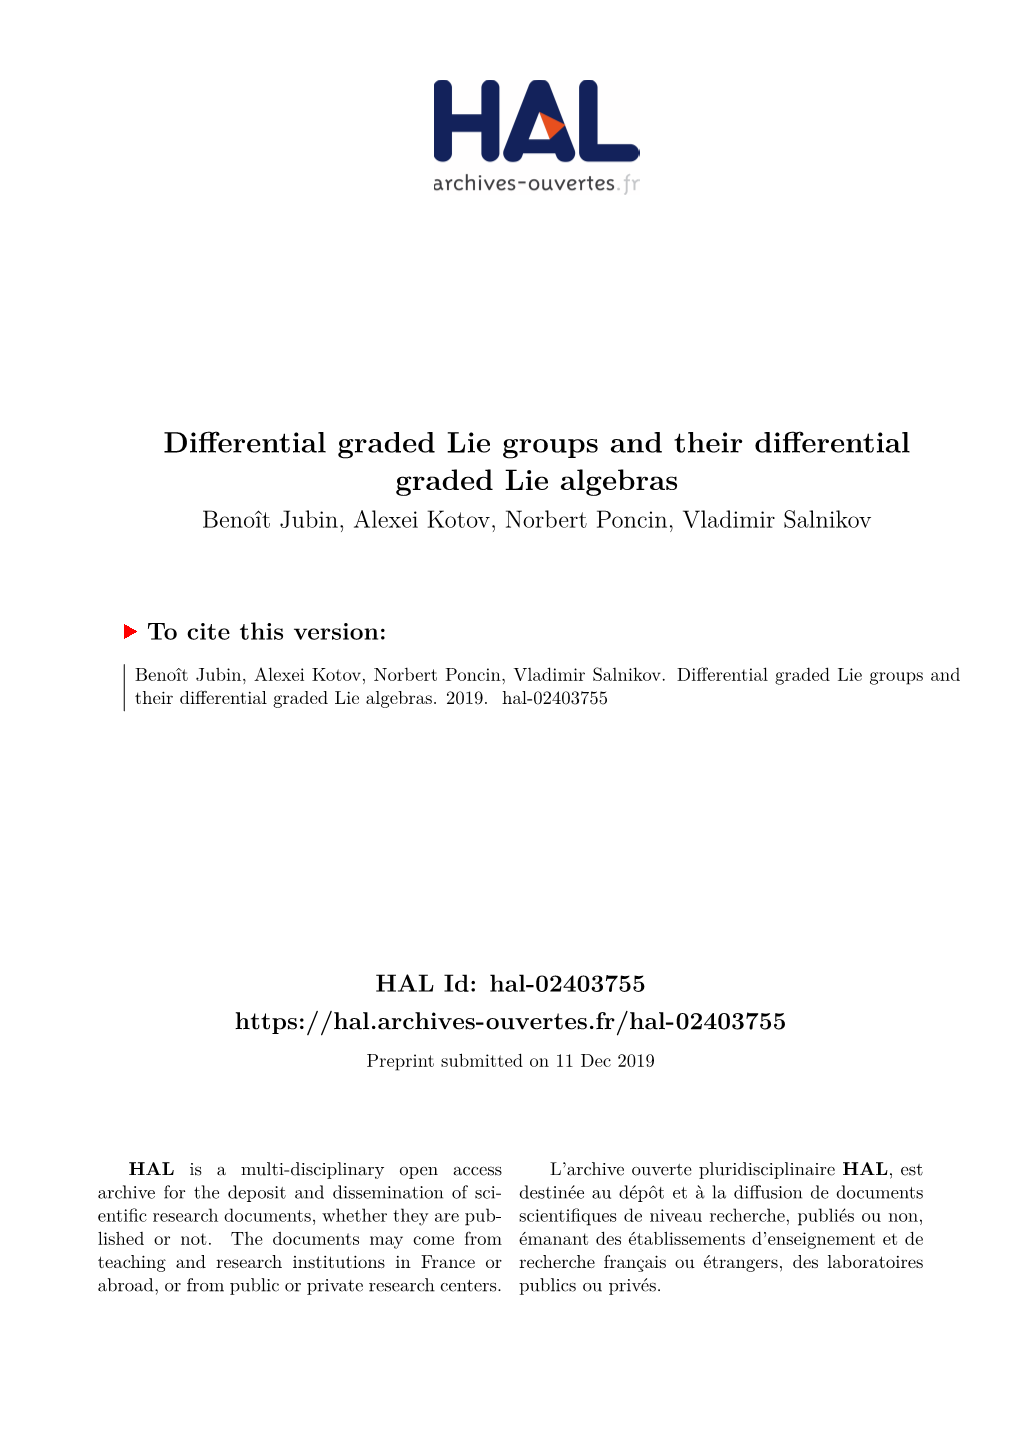 Differential Graded Lie Groups and Their Differential Graded Lie Algebras Benoît Jubin, Alexei Kotov, Norbert Poncin, Vladimir Salnikov